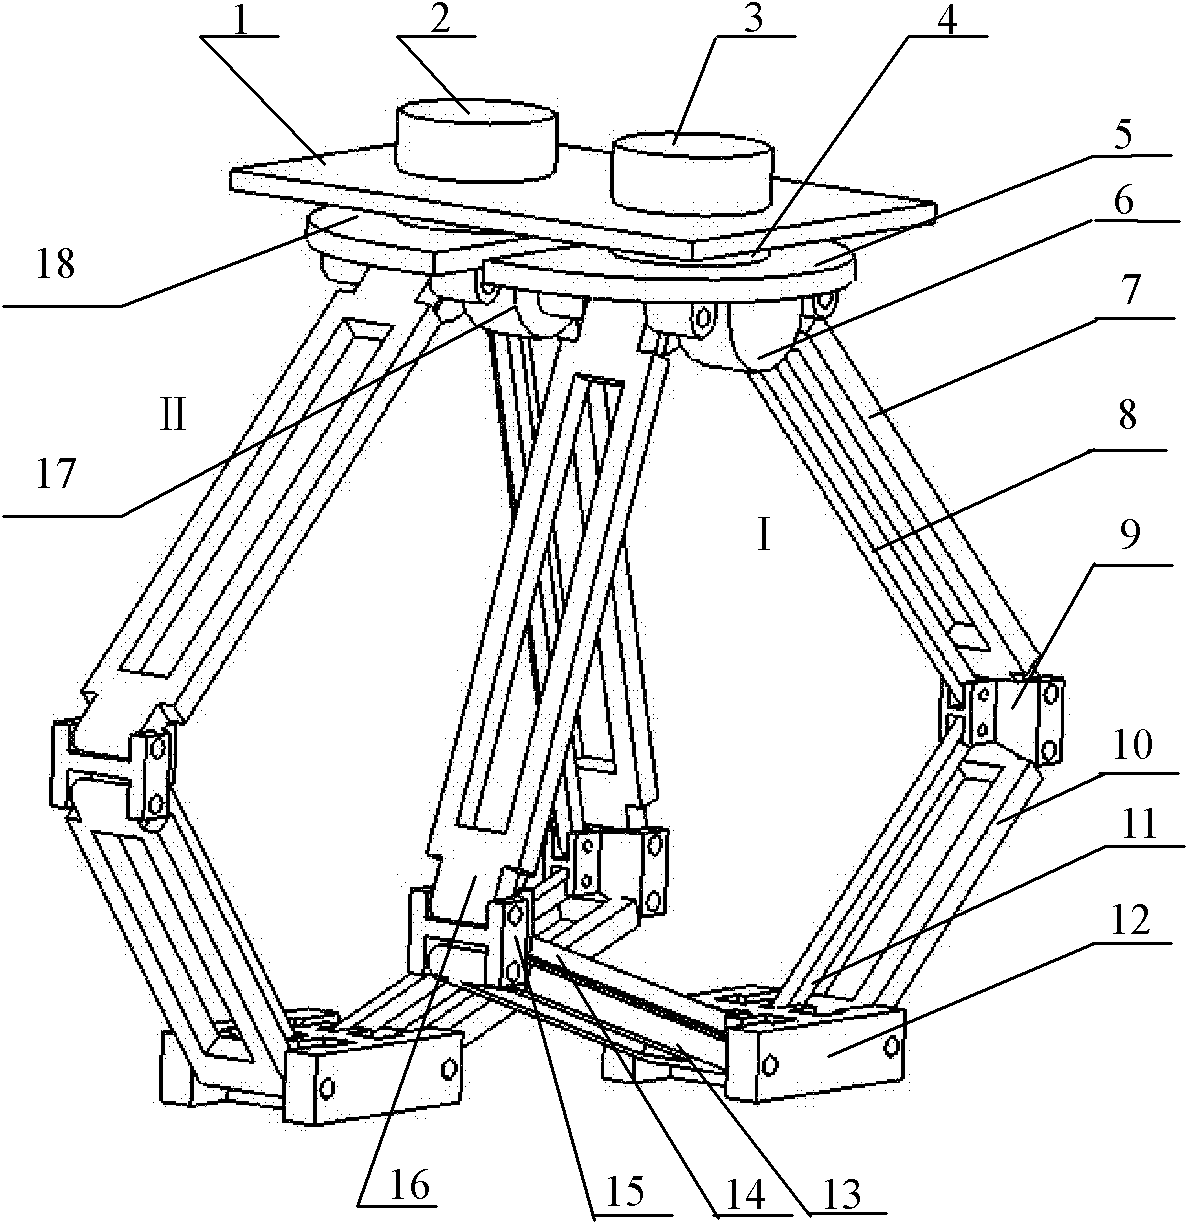 Two-leg walking mechanism